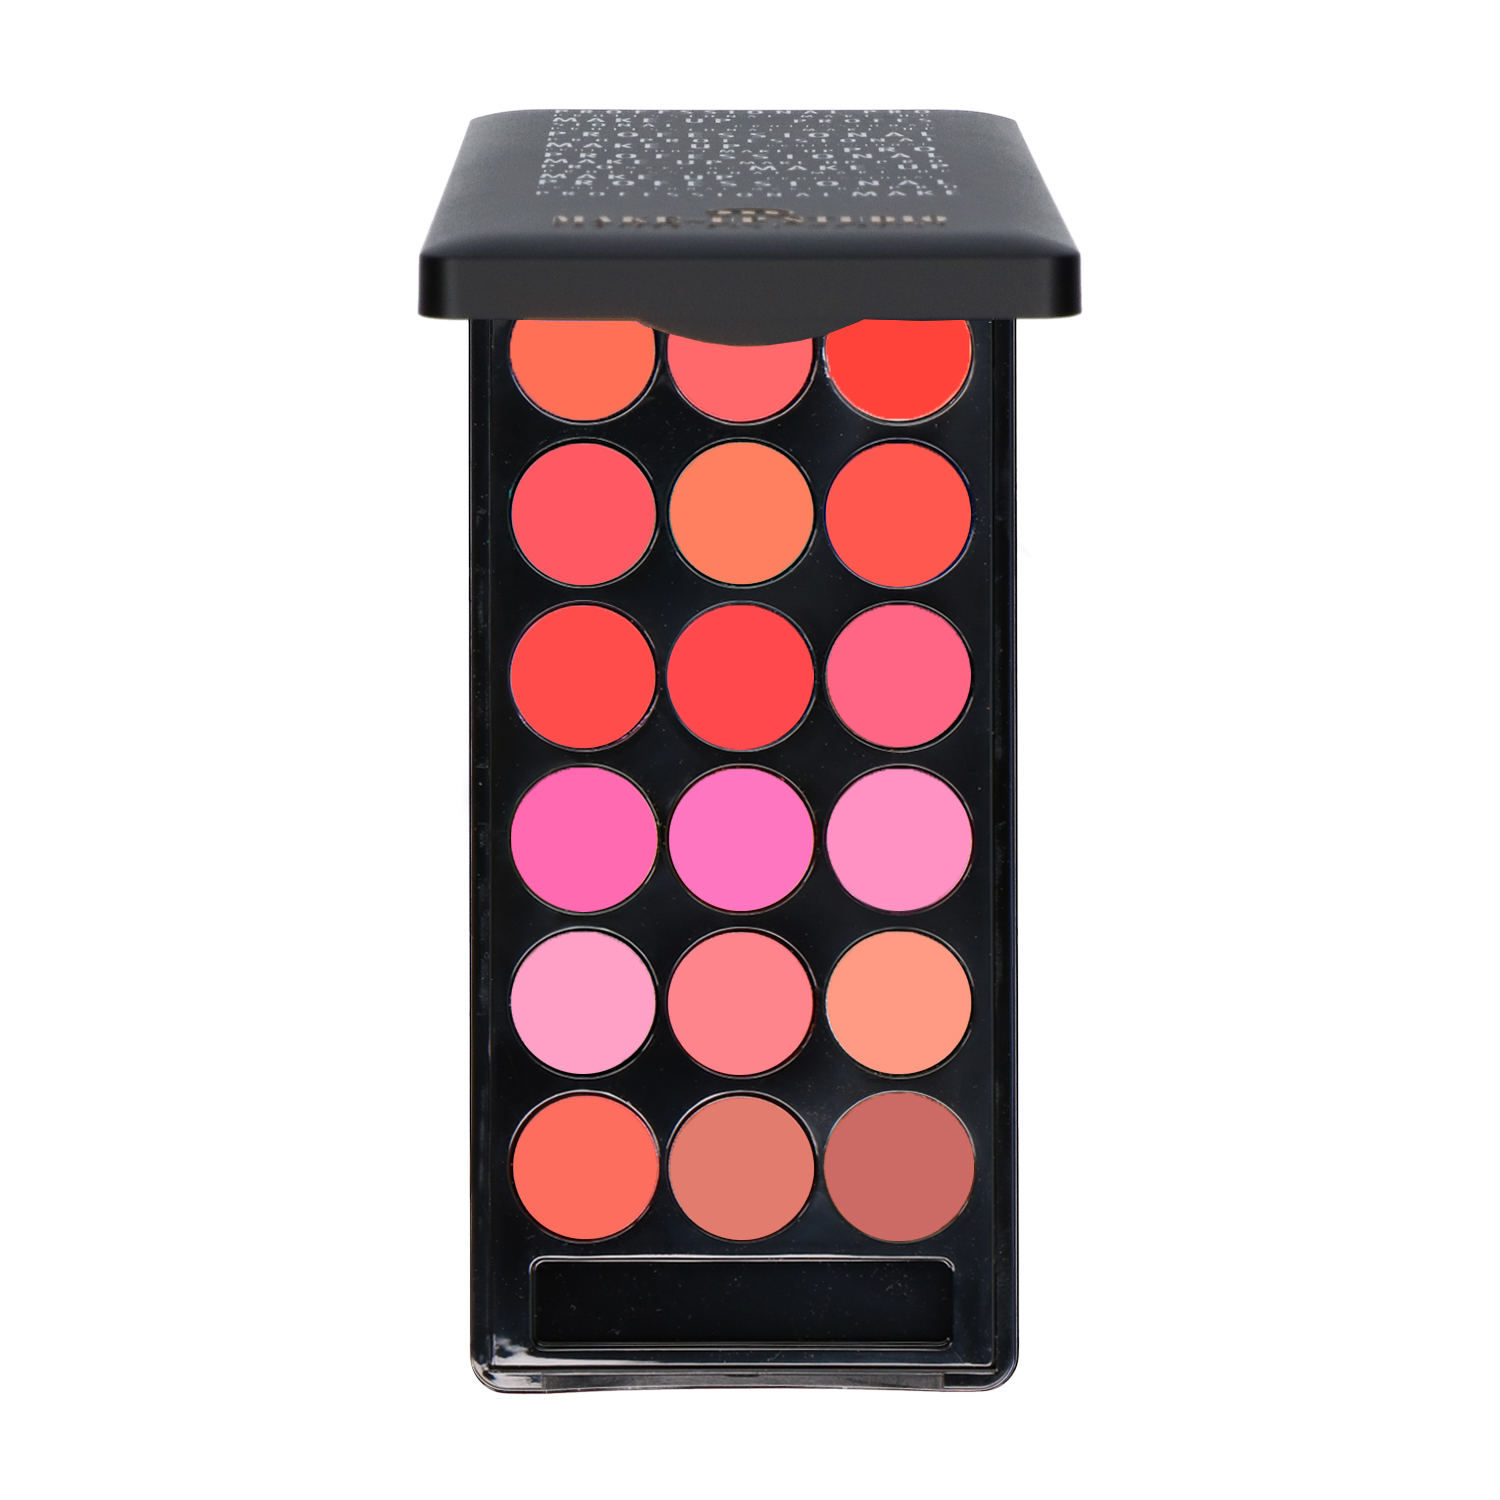 Make-up Studio Lipcolourbox 18 kleuren - 4